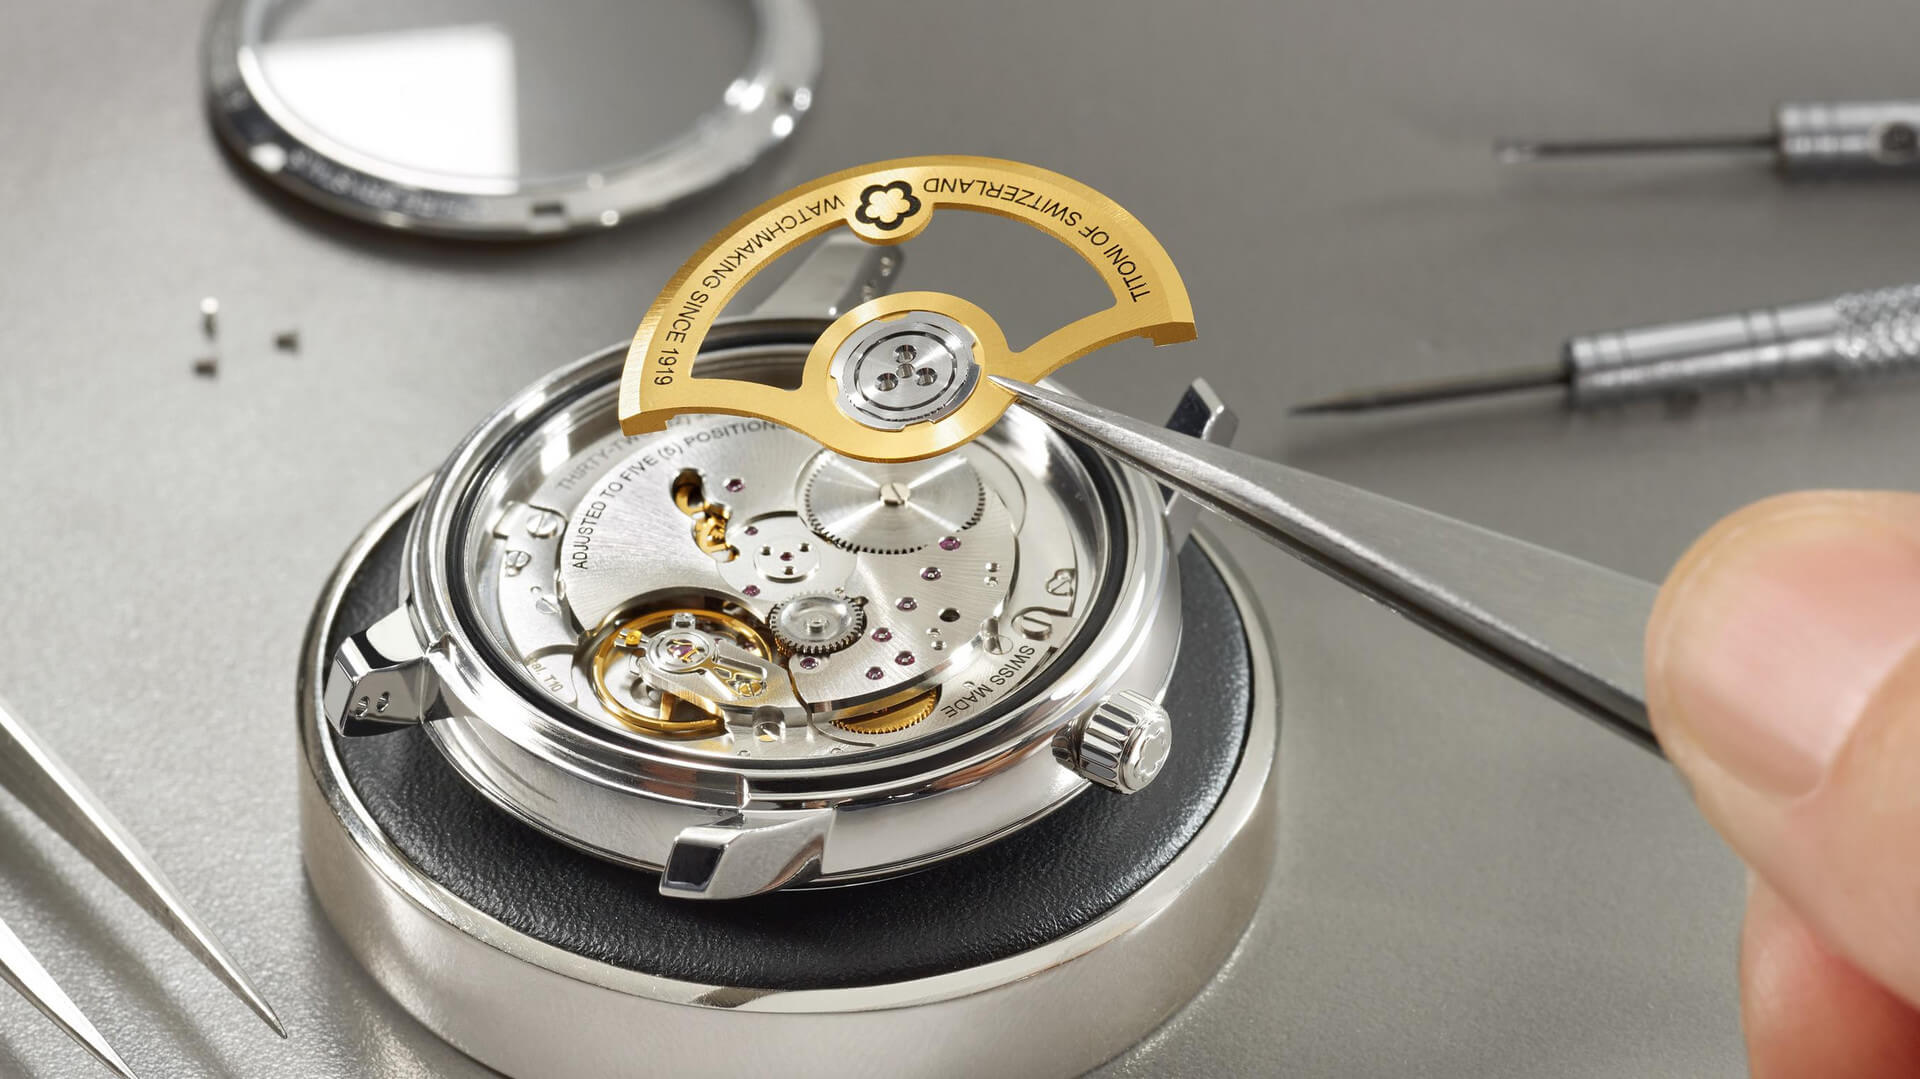 TITONI of Switzerland - High quality mechanical watches since 1919